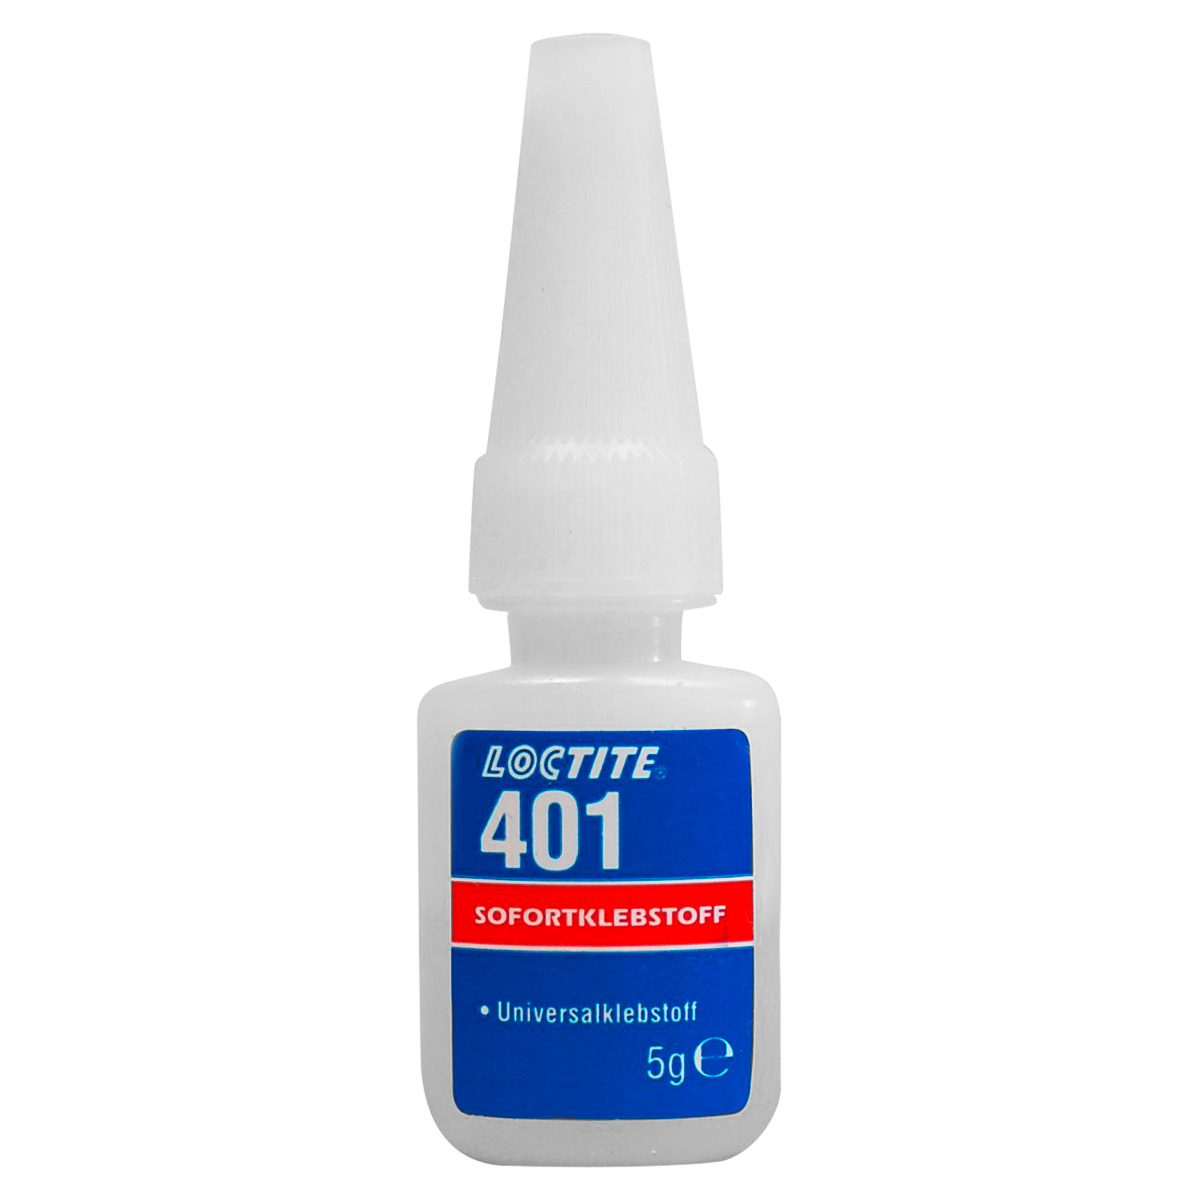 Loctite 401 Sofortklebstoff, 5 g